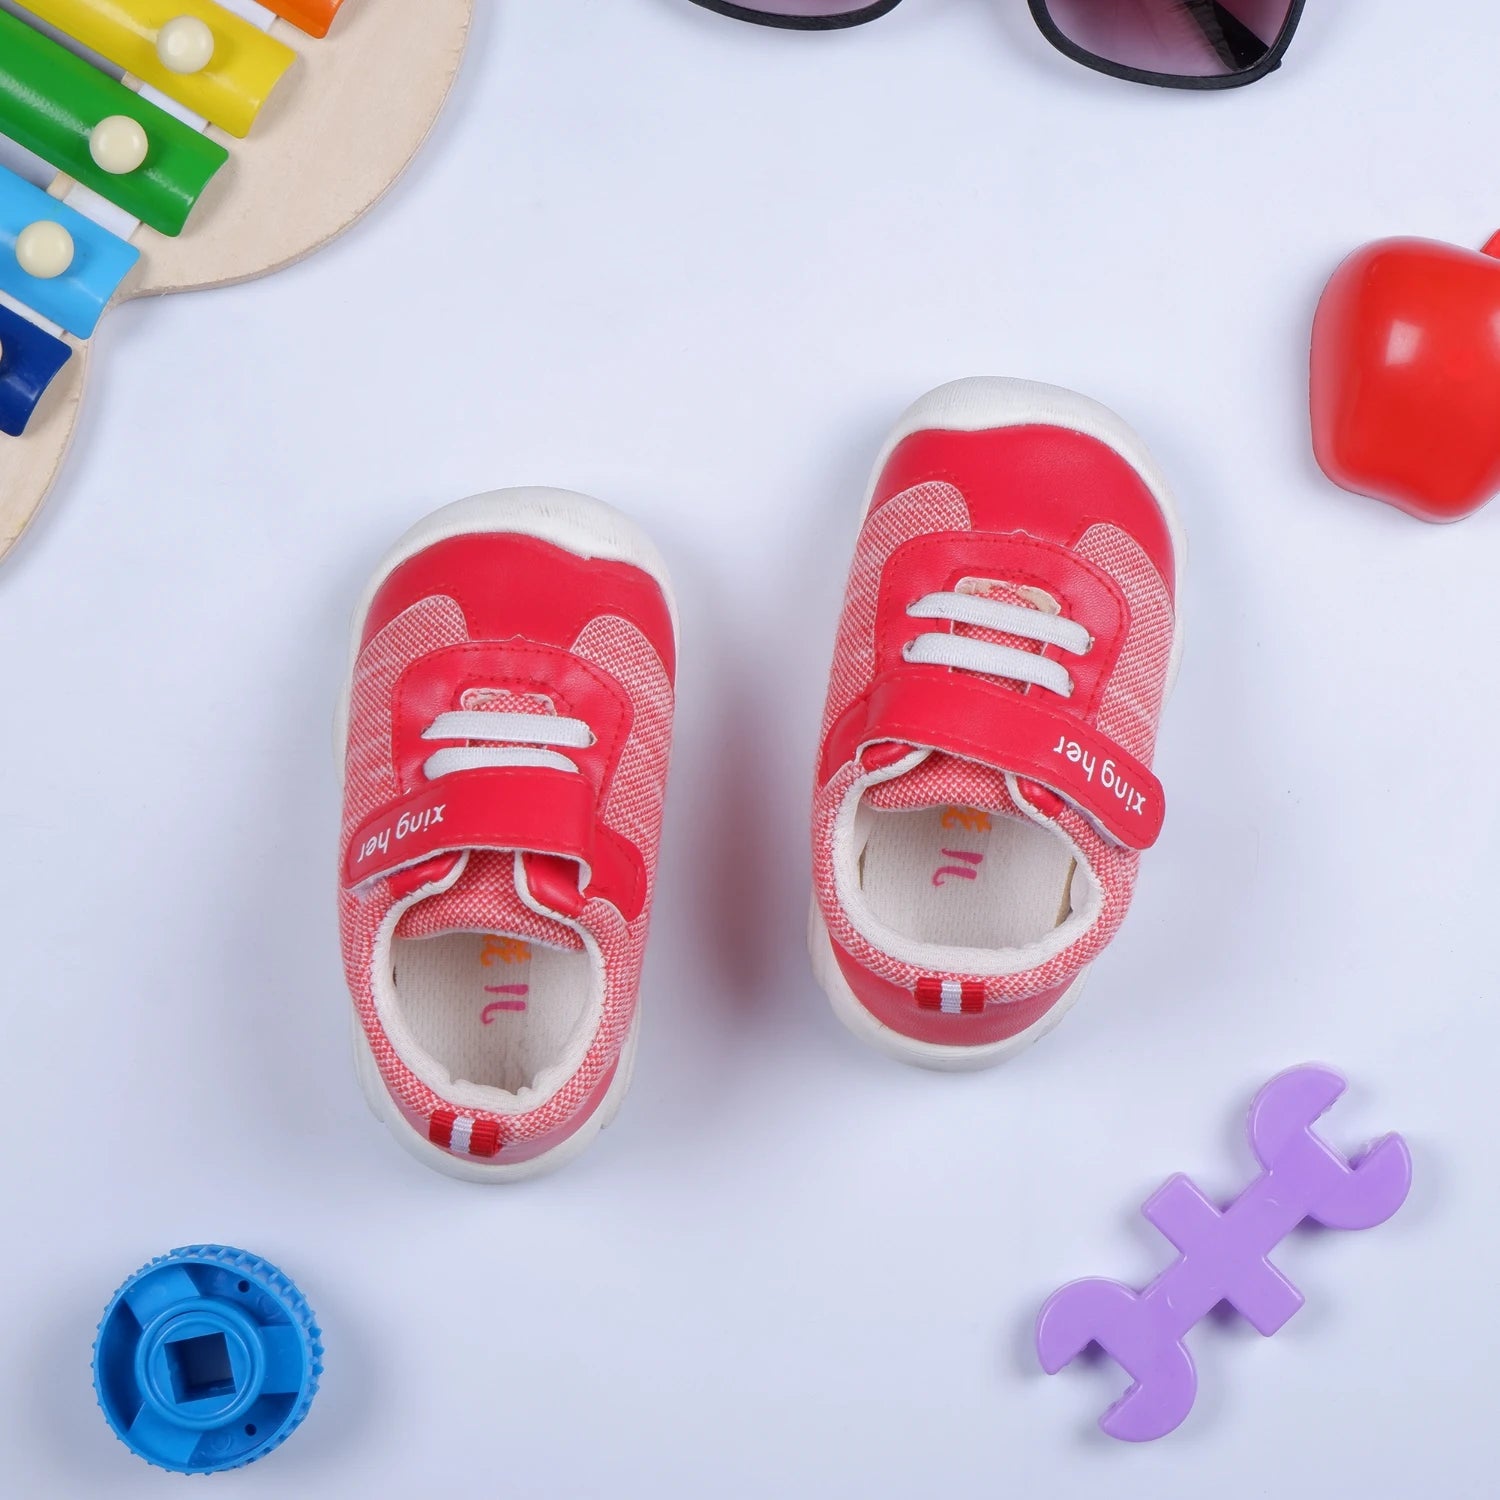 Footwear for Little Ones: Newborn Baby Shoes - Unisex